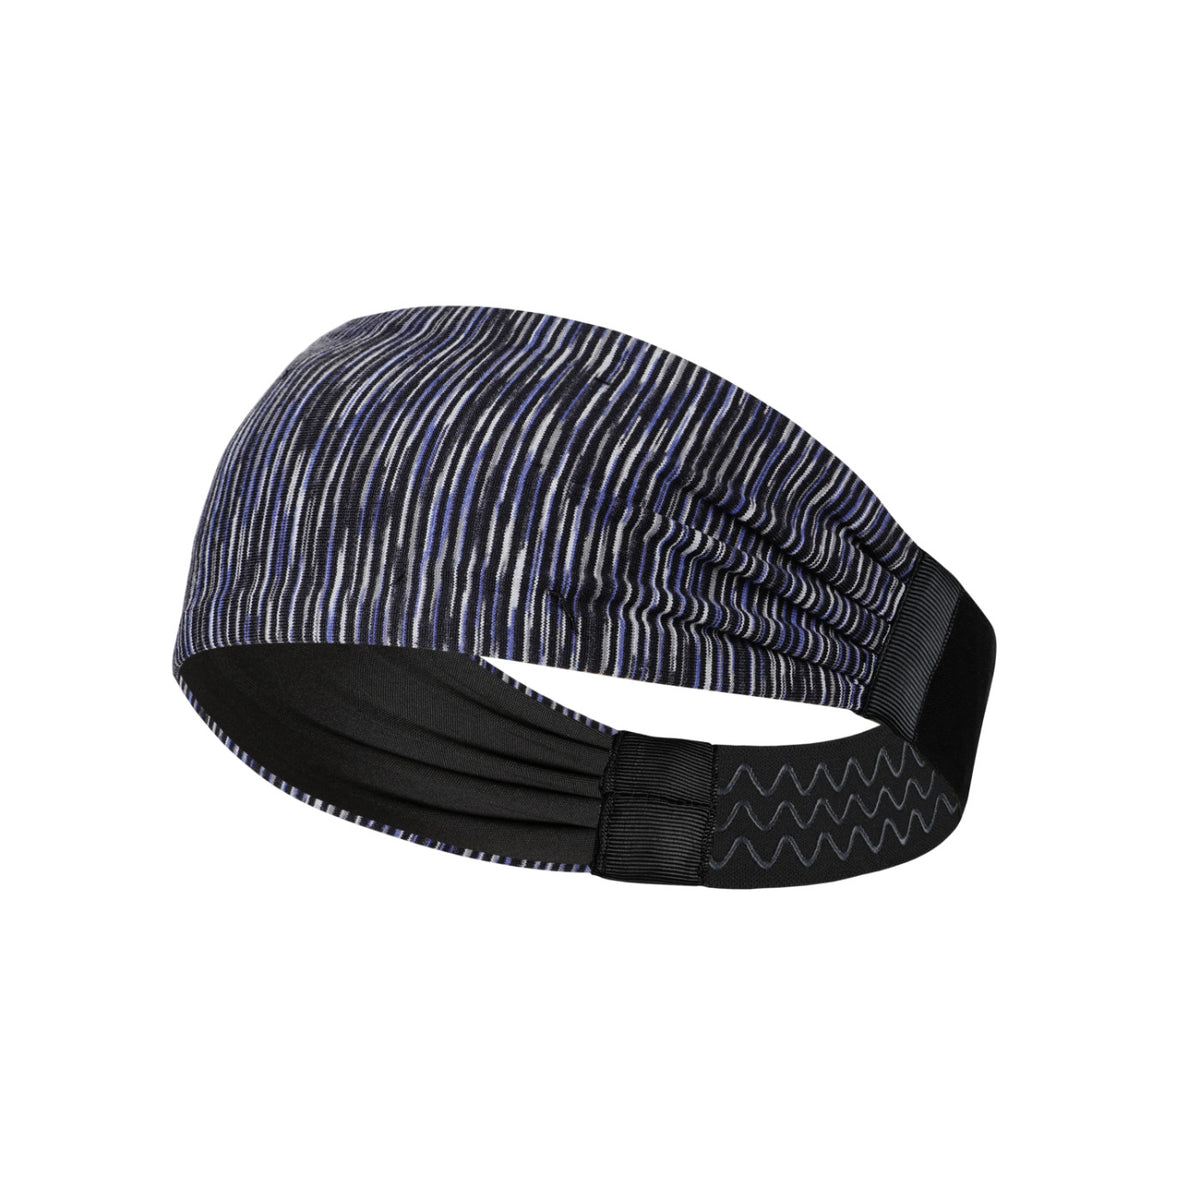 Sports Headband For Men and Women (Twilight)